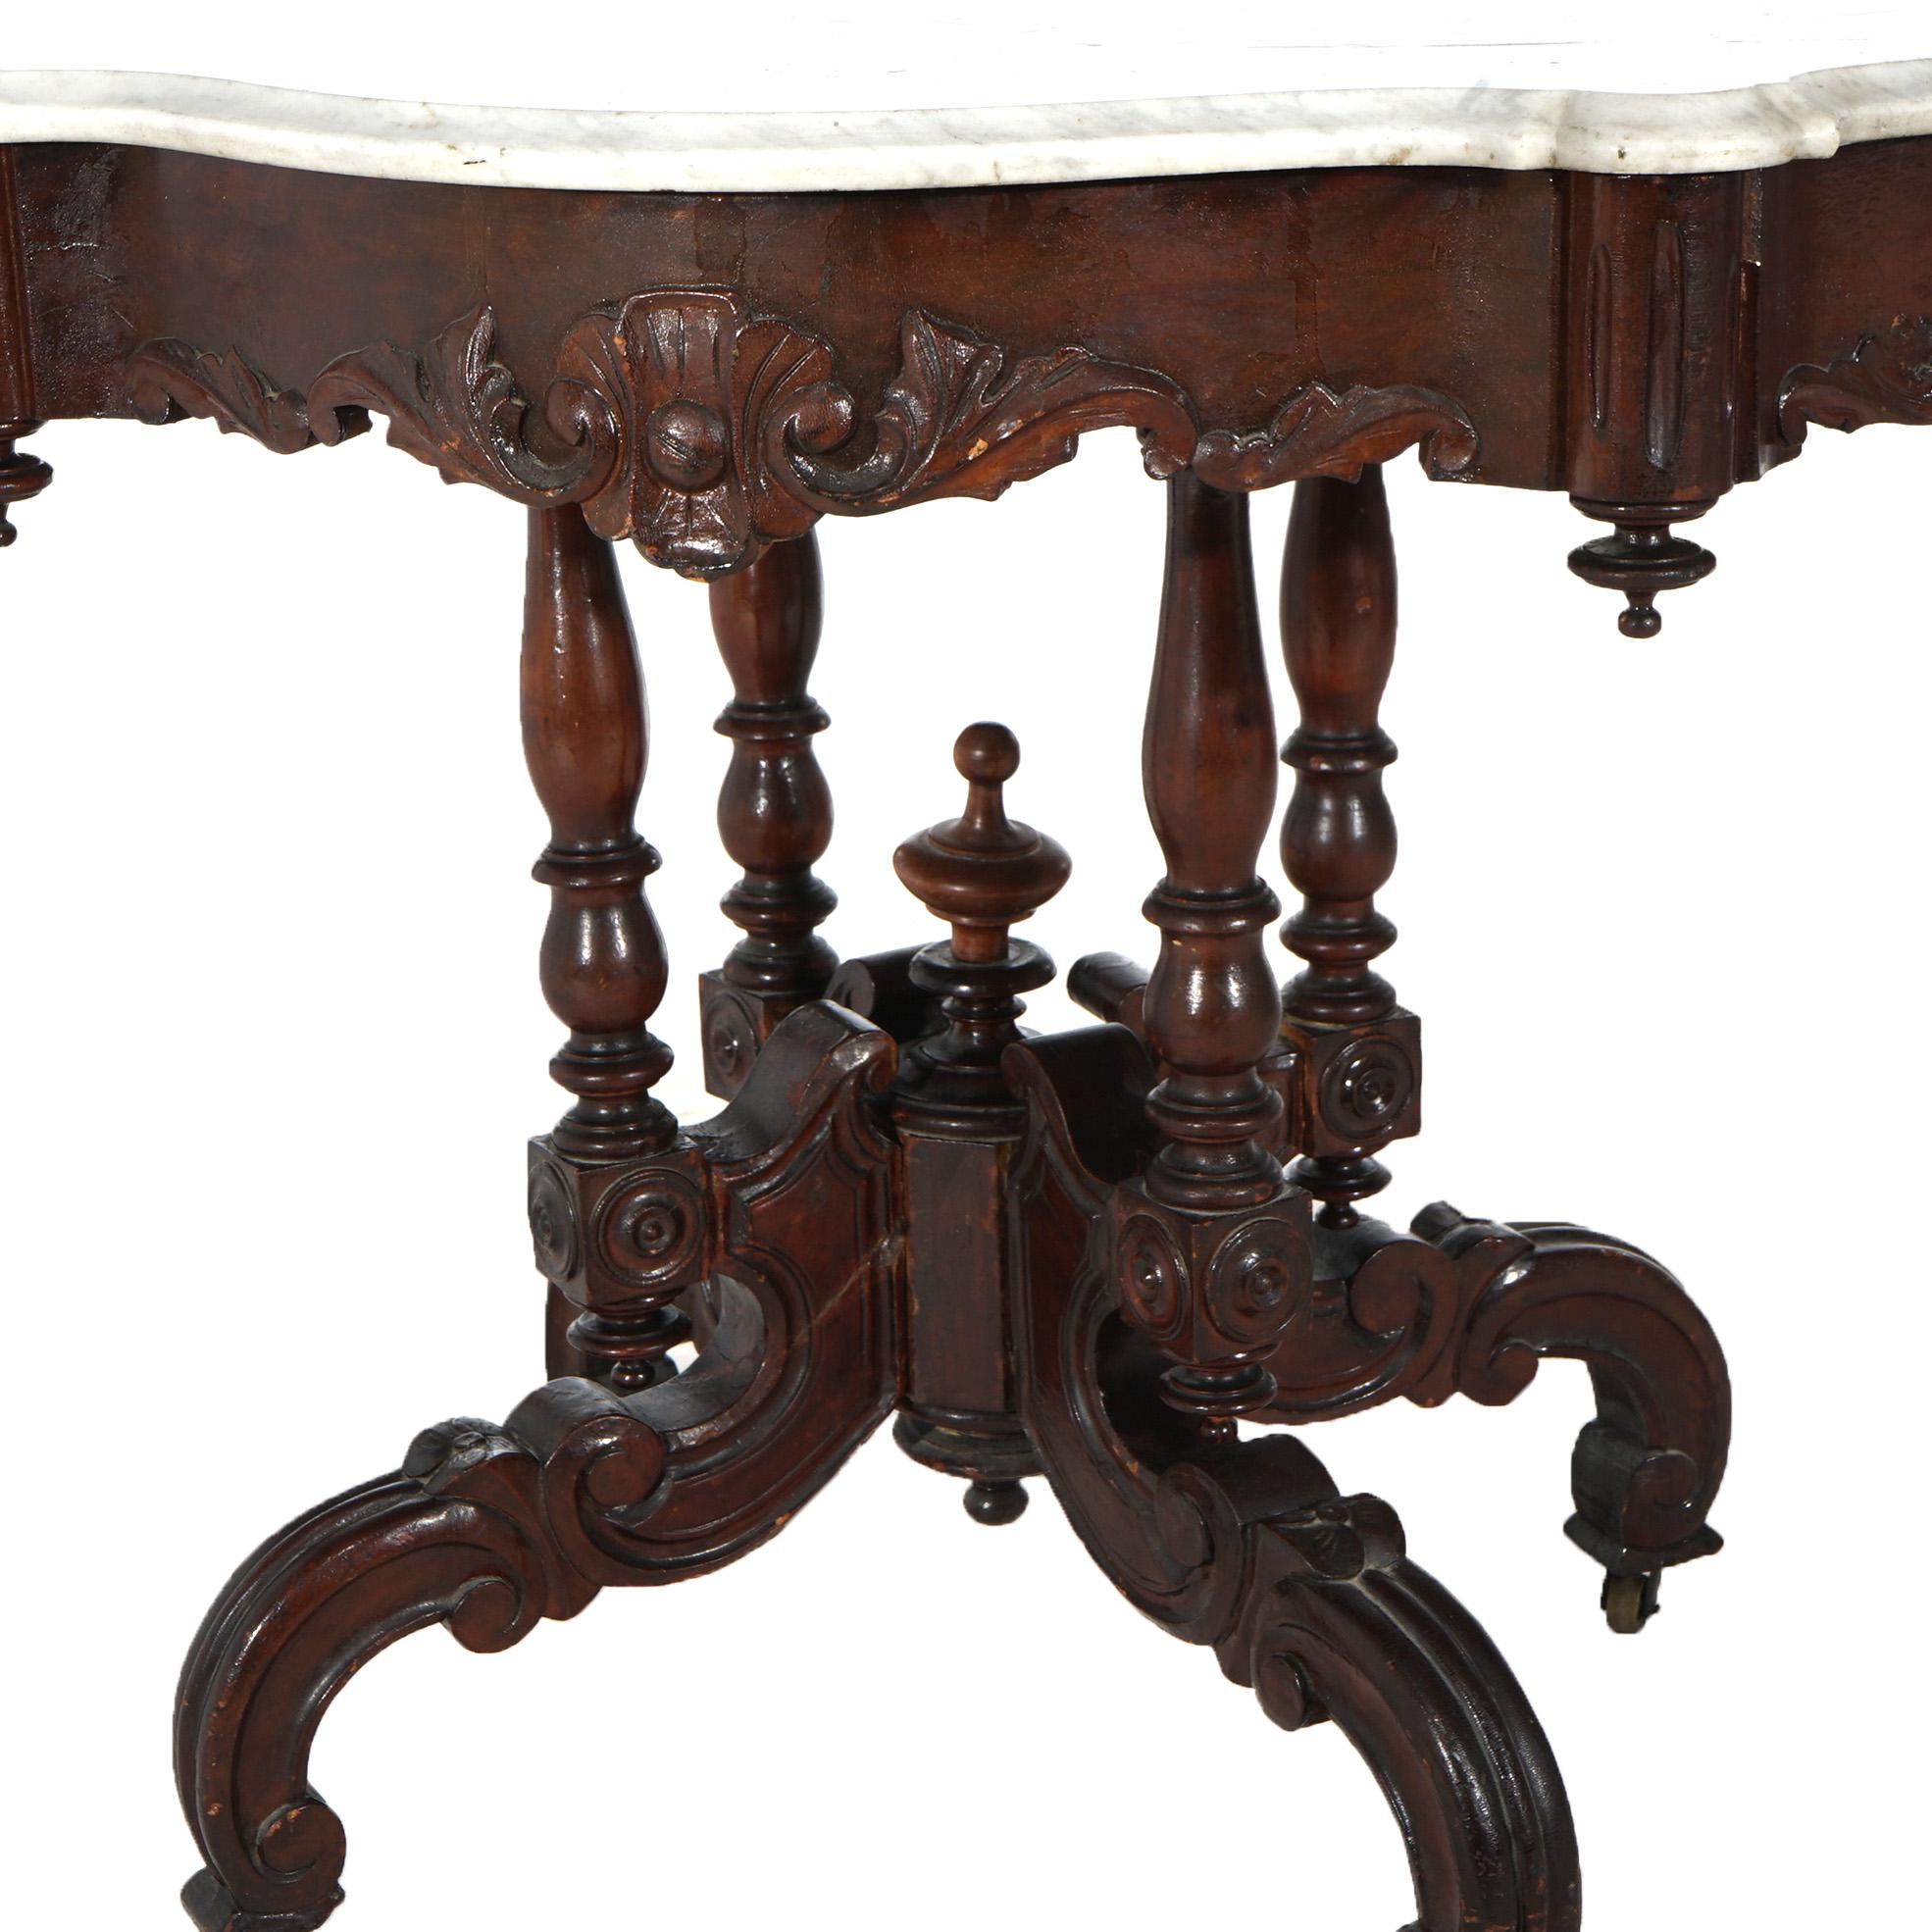 Antique Renaissance Revival Carved Walnut & Marble Turtle Top Table C1890 For Sale 1